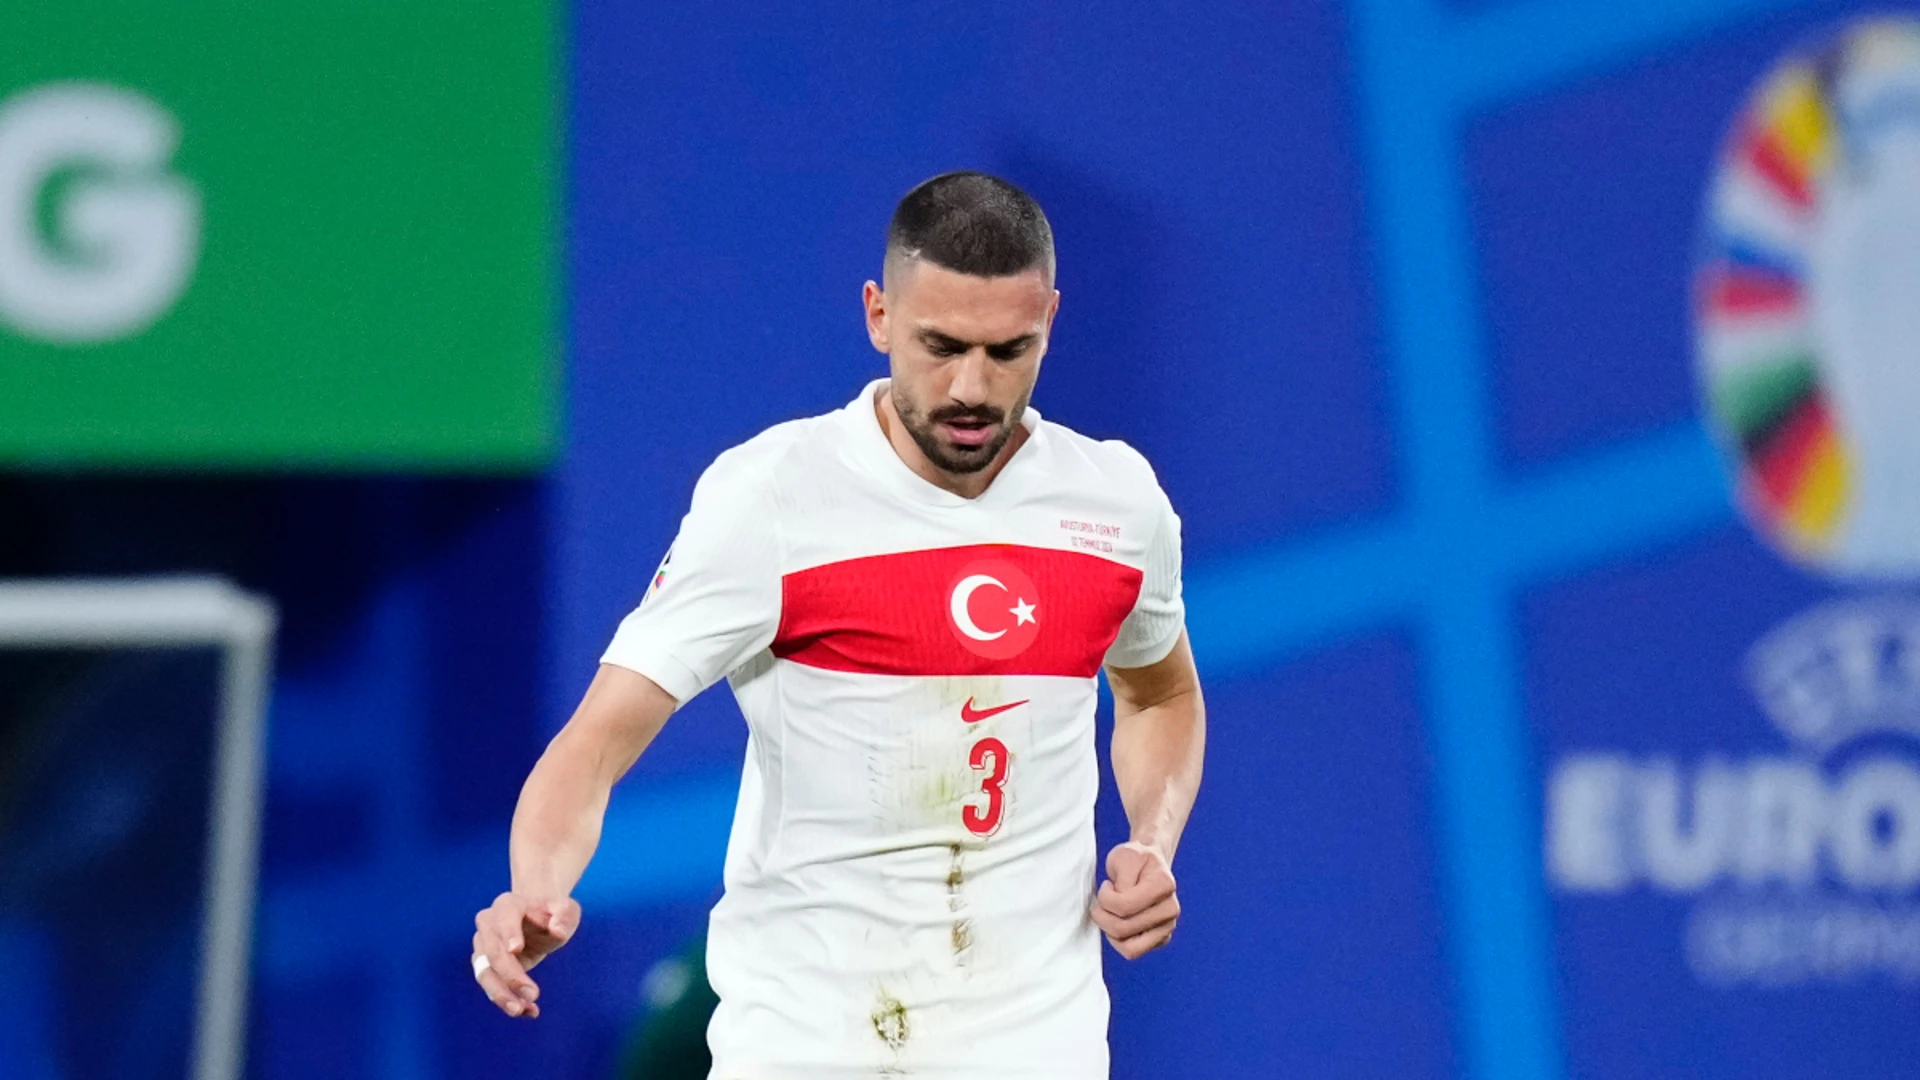 Uefa investigates Turkey defender Demiral for far-right gesture